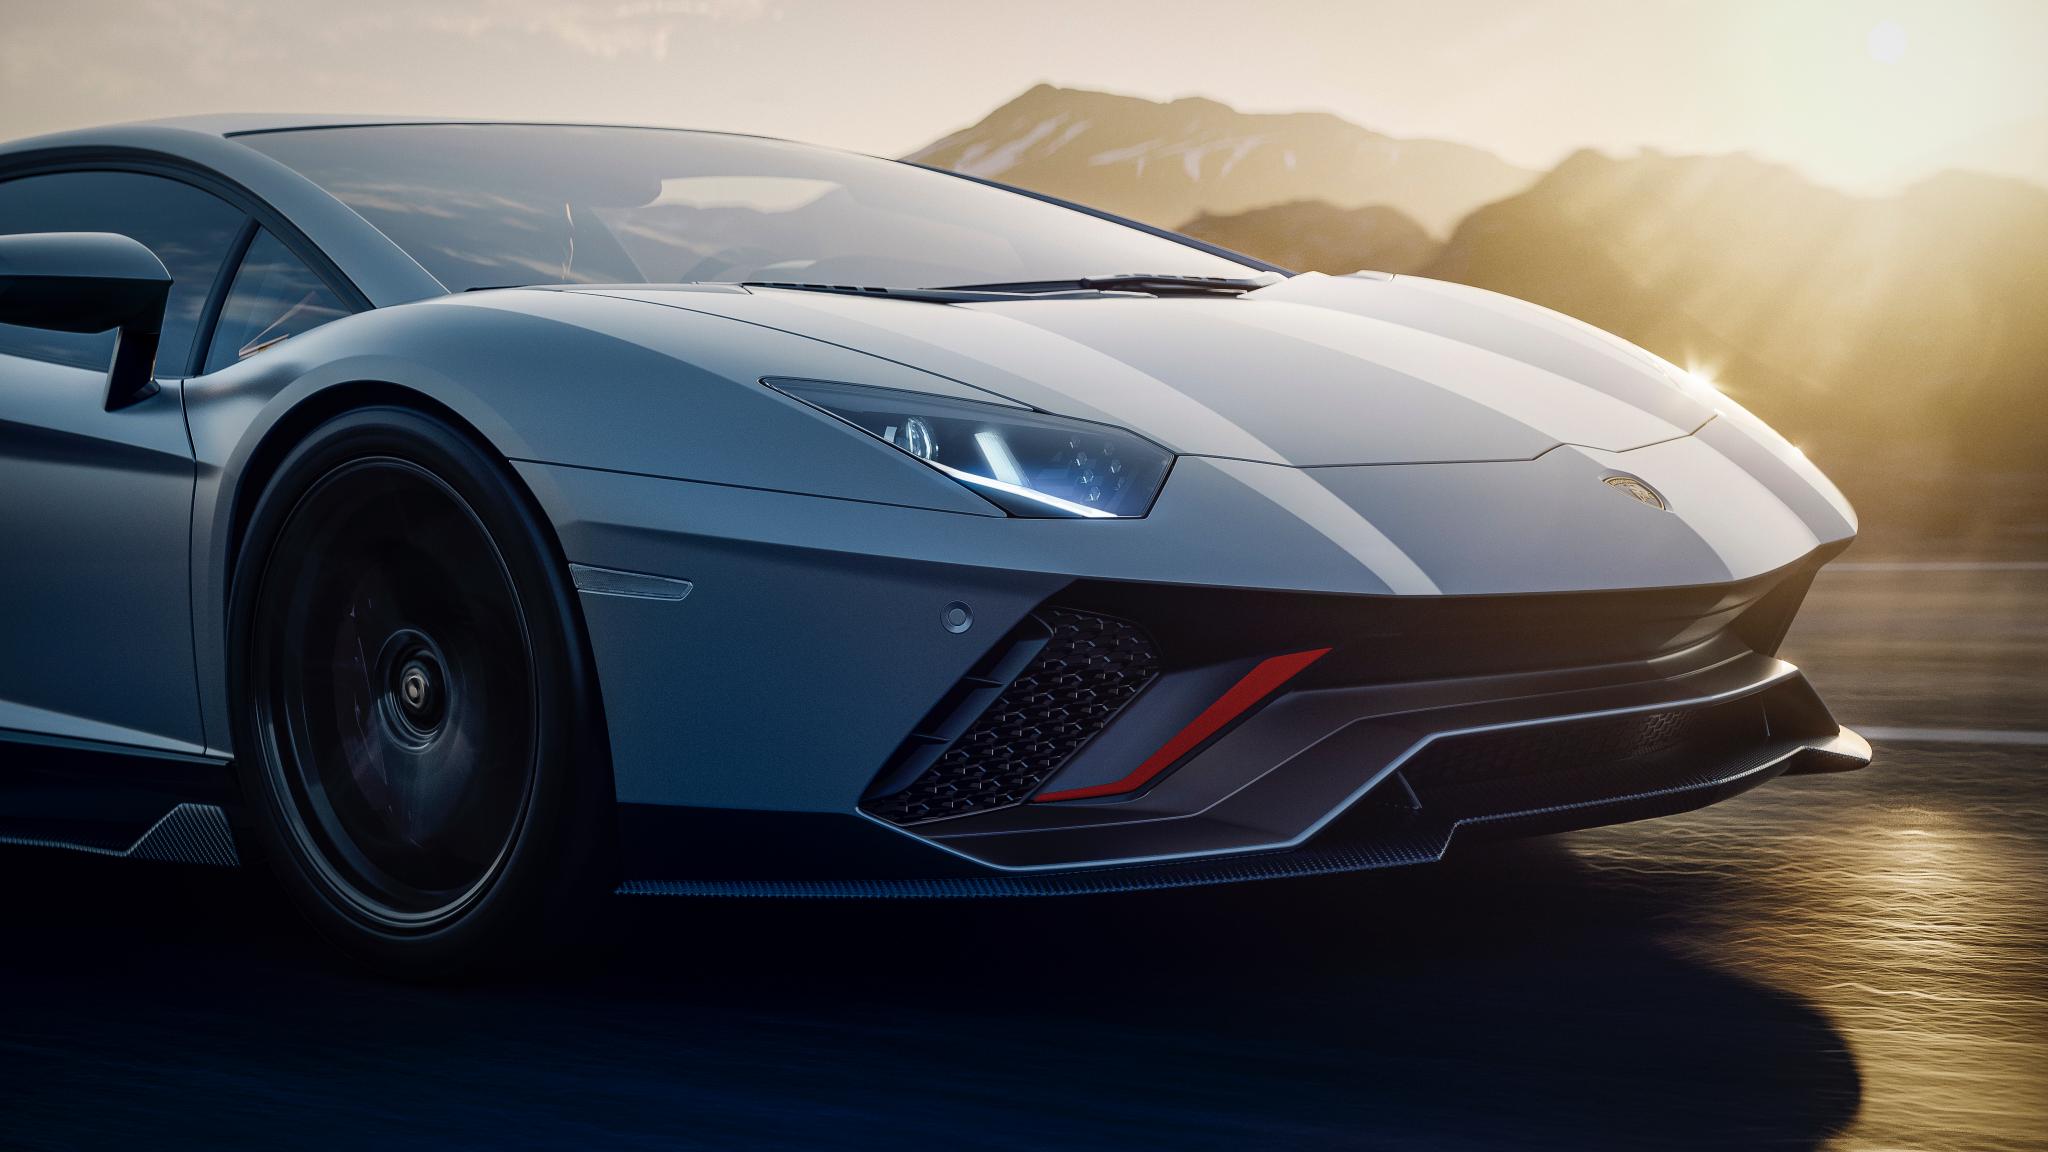 Lamborghini-Aventador-LP-780-4-Ultimae-tinhte-10.jpg